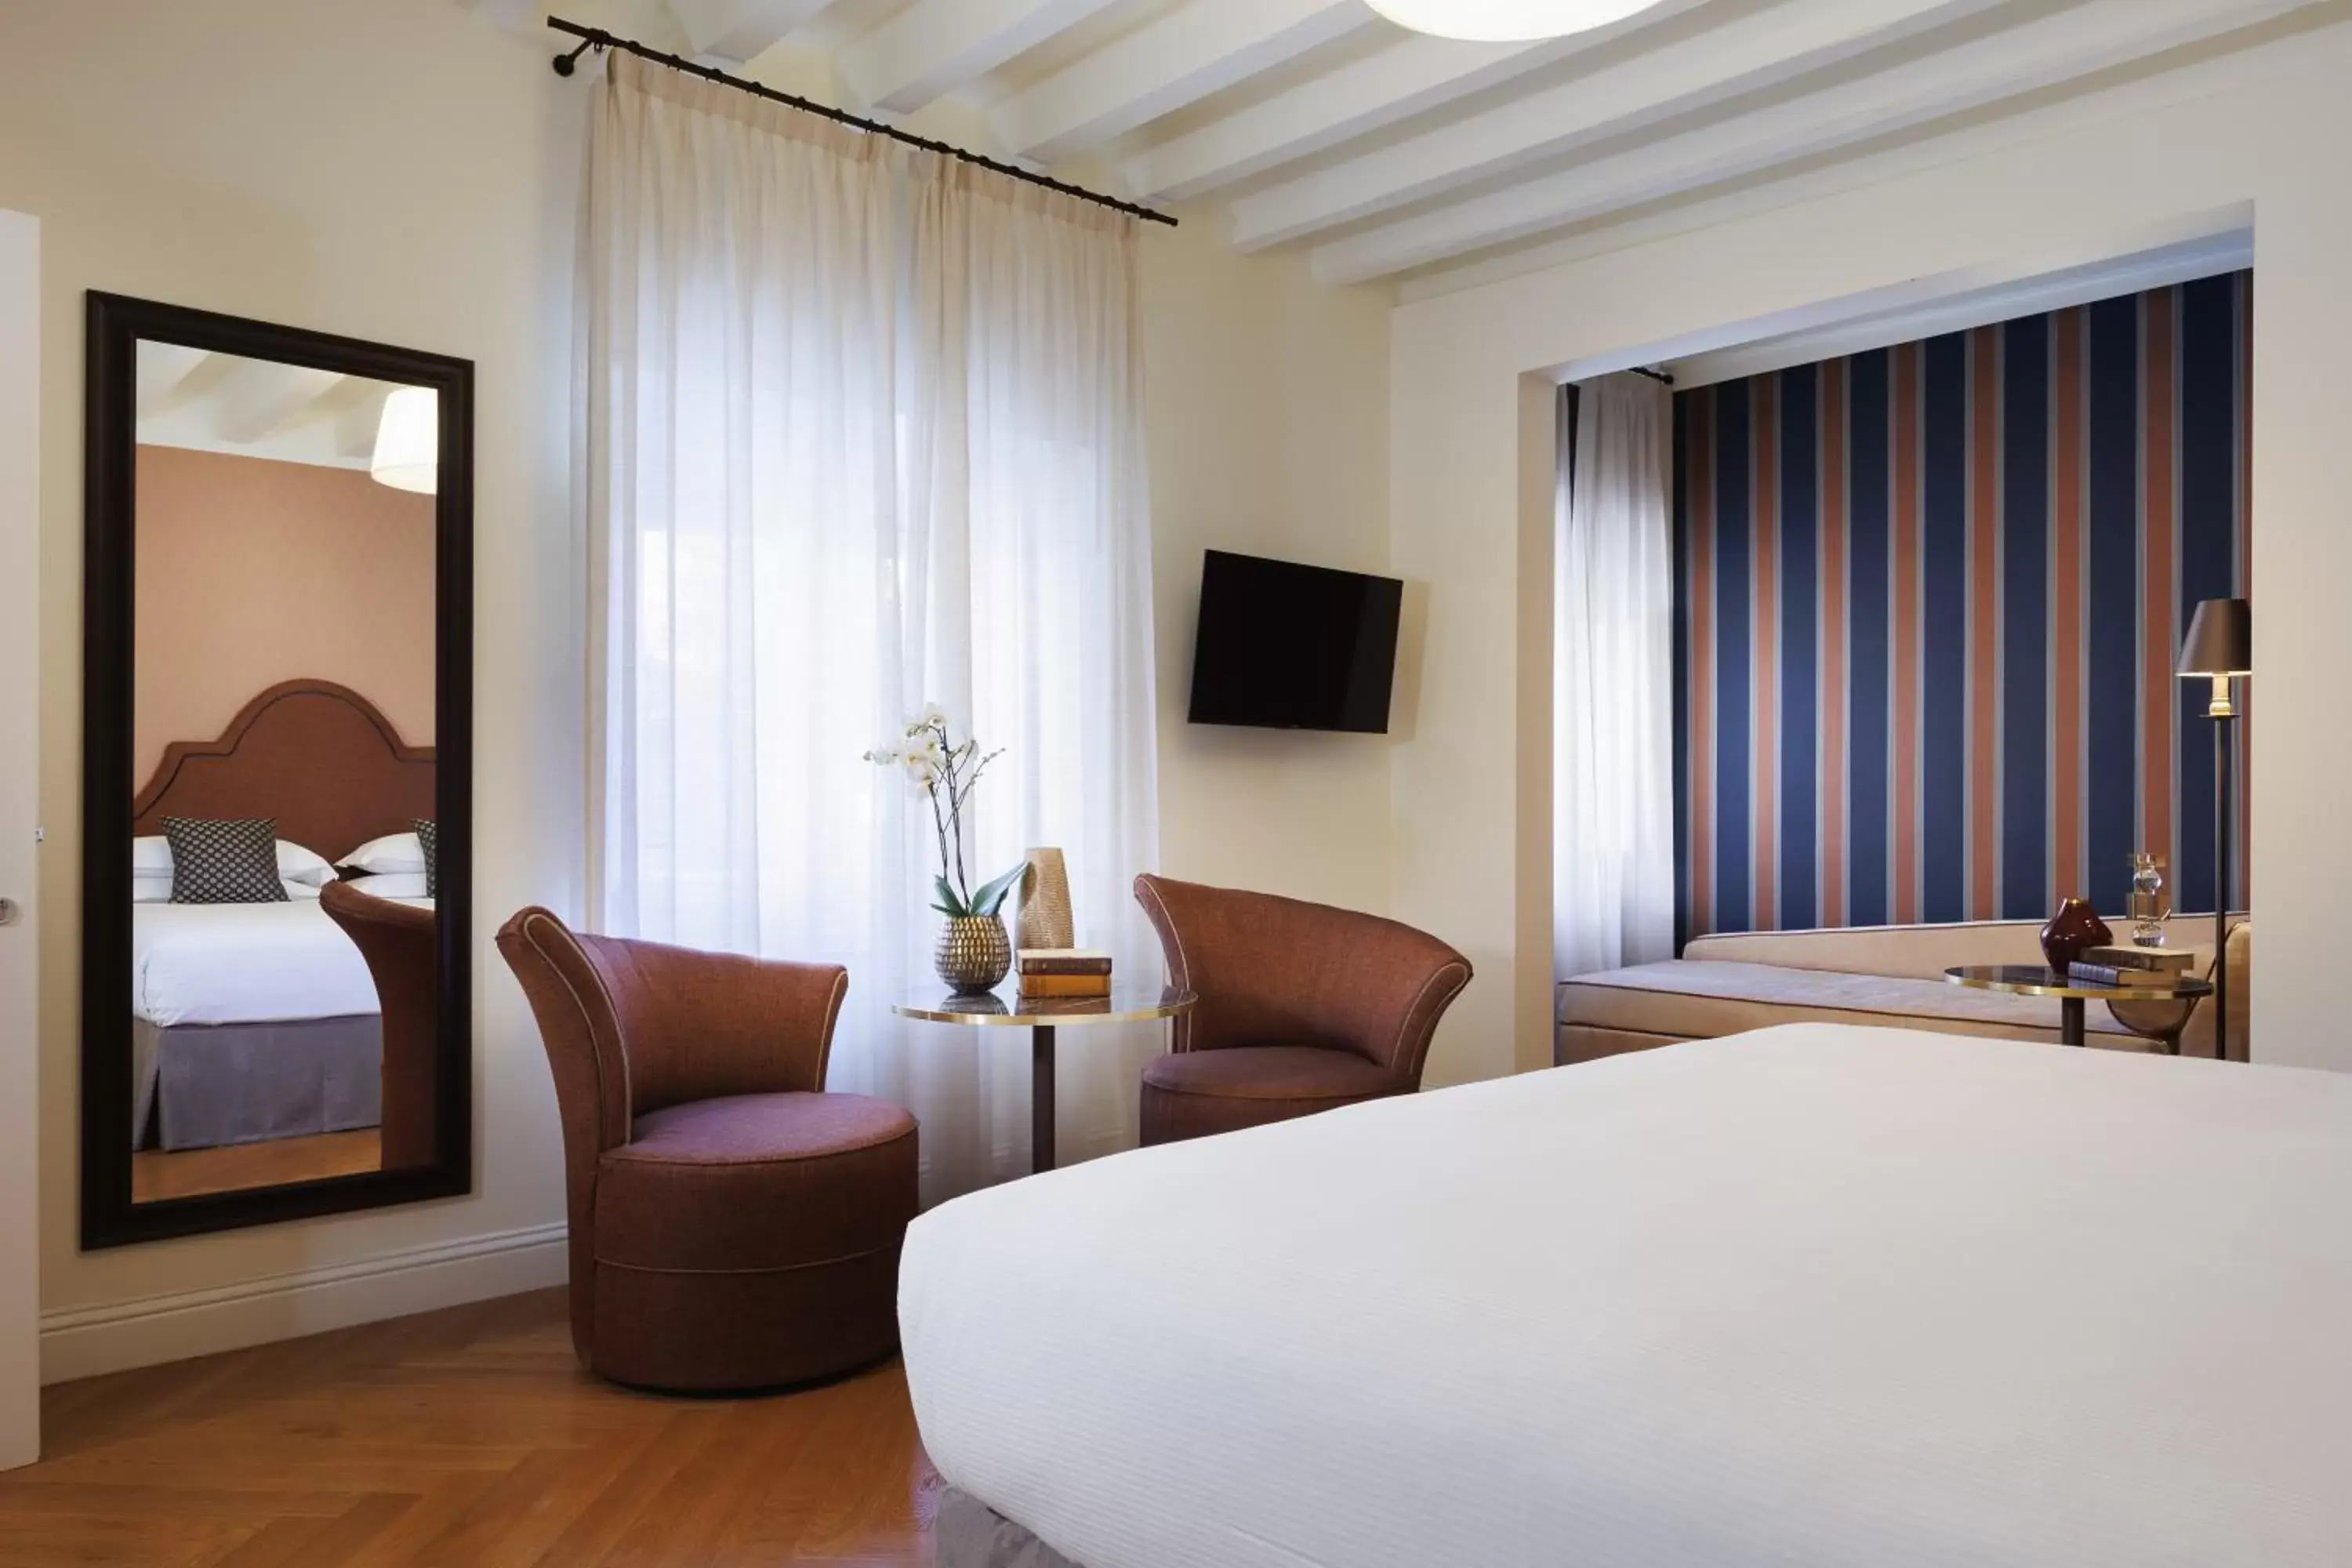 Bed in Maison Santa Croce